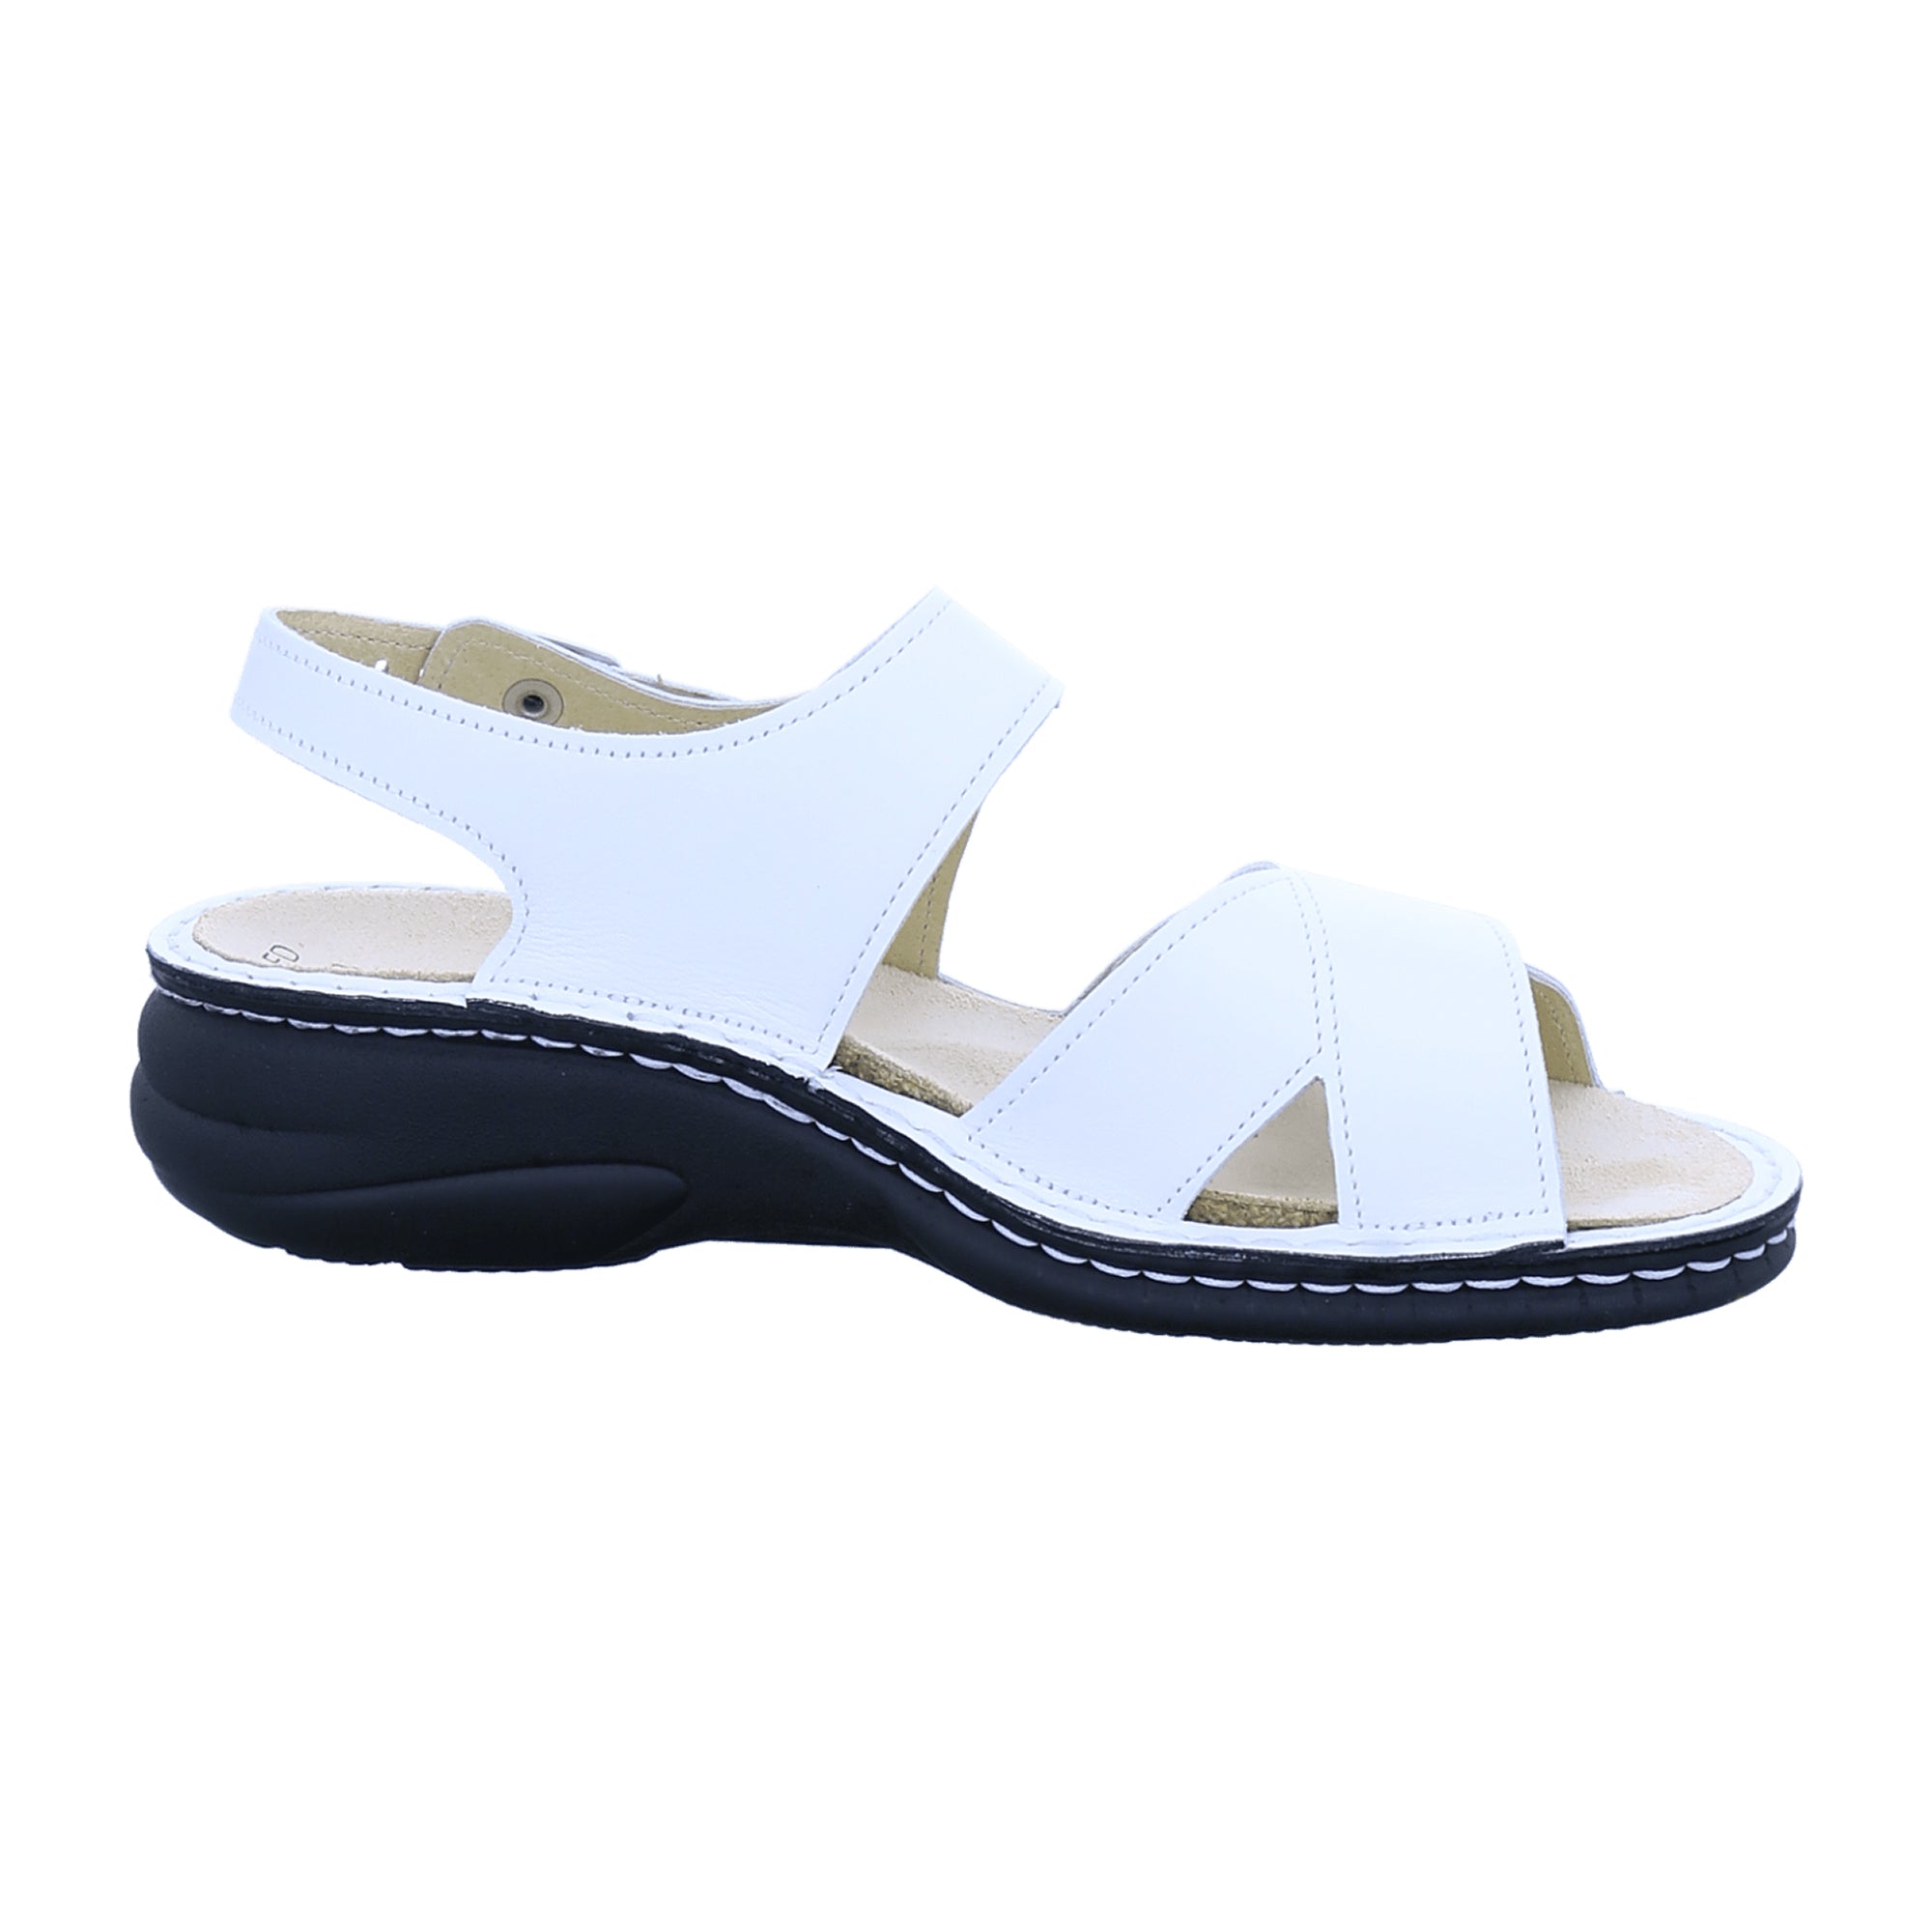 Finn Comfort Women's Comfortable White Sandals - Stylish & Durable